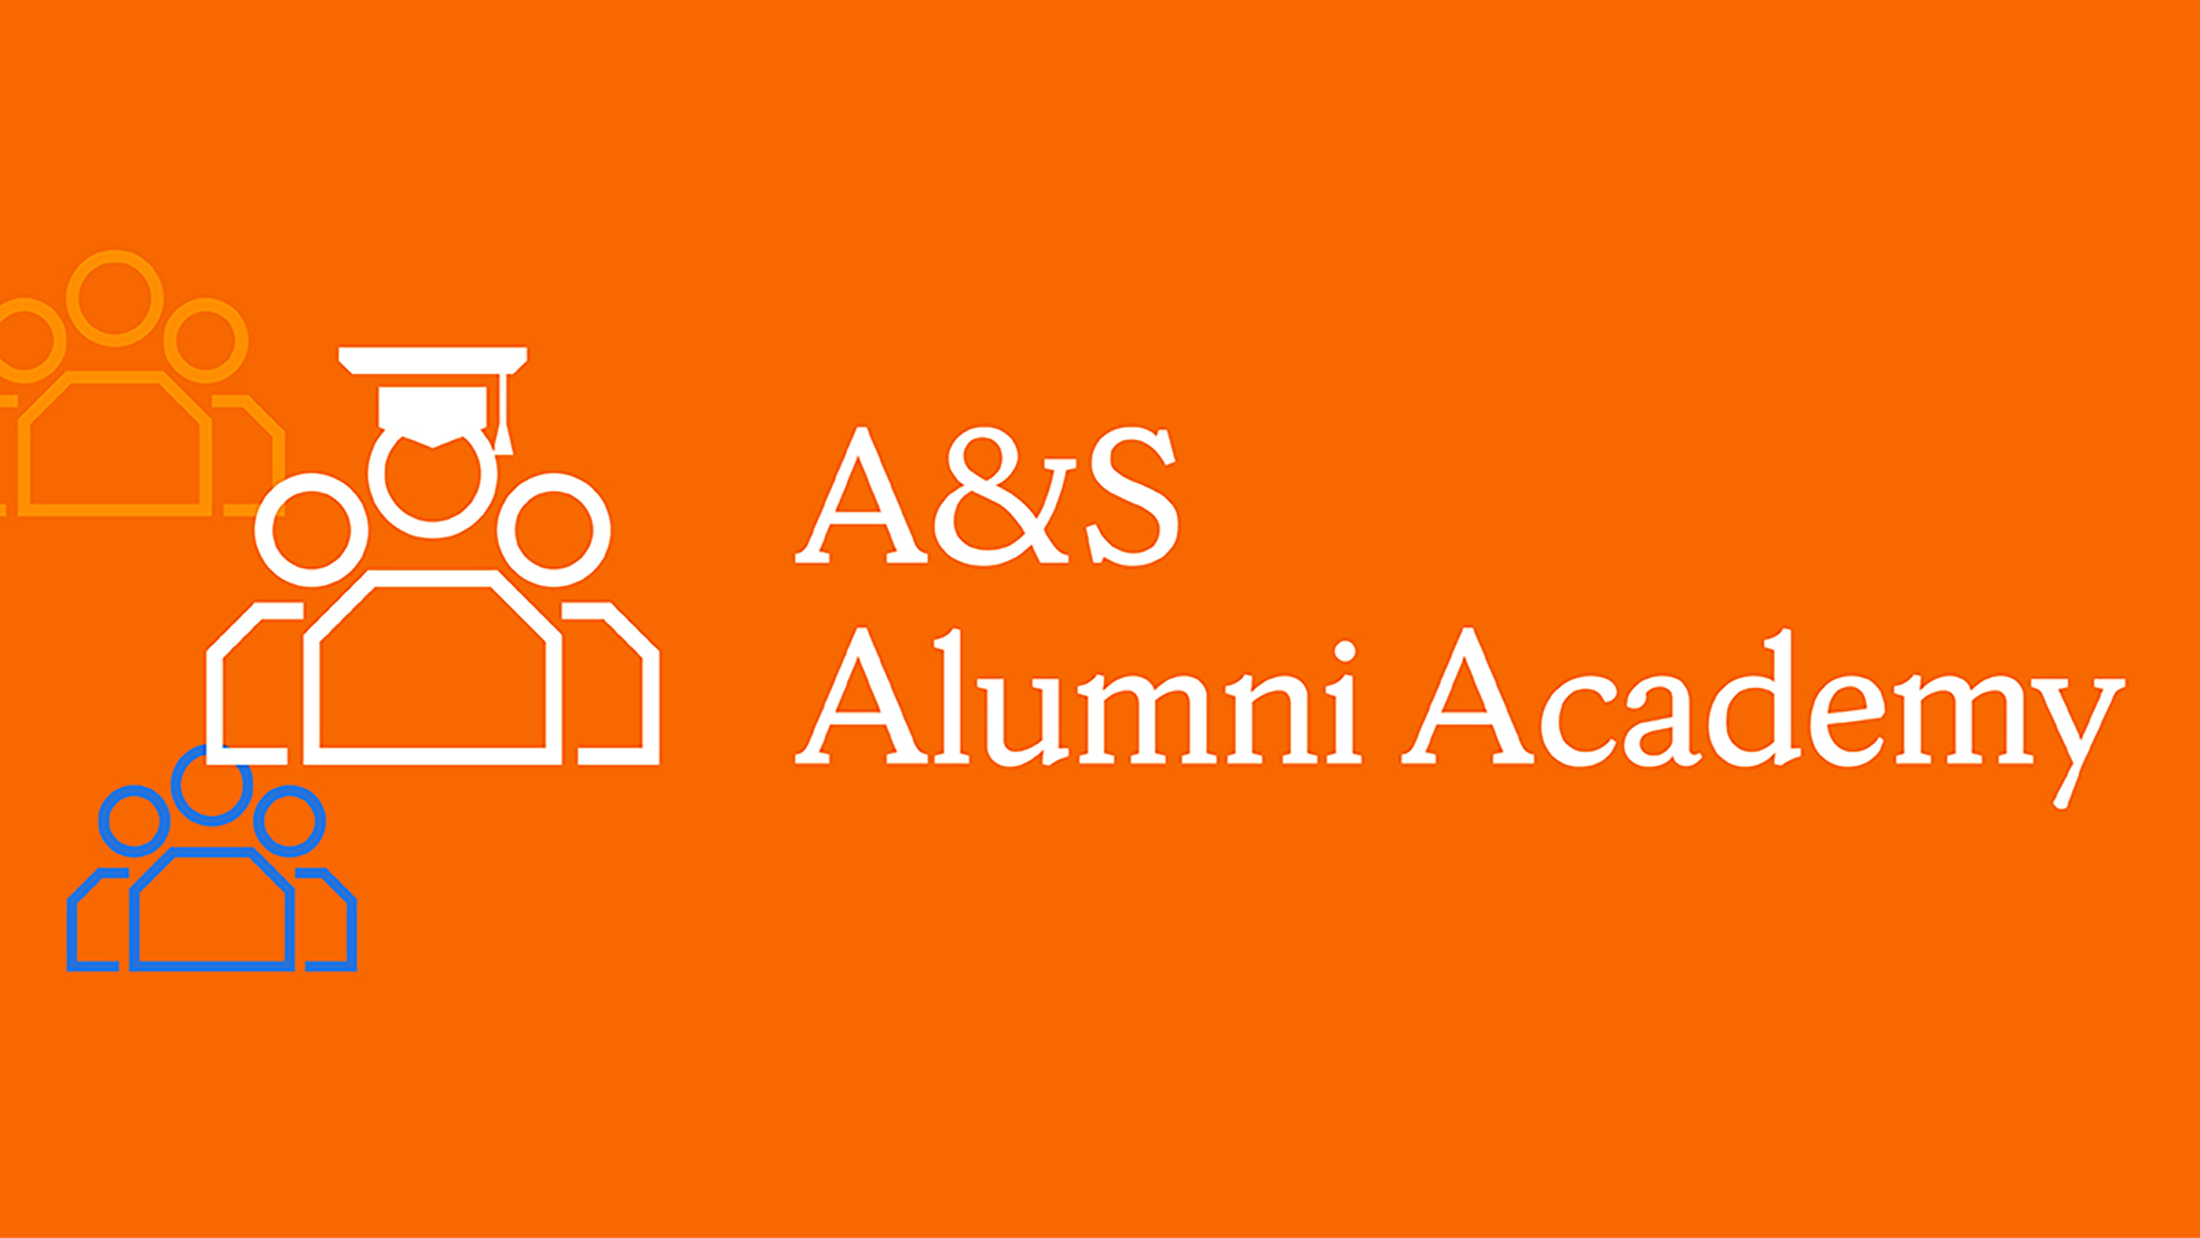 a&s alumni academy logo on an orange background